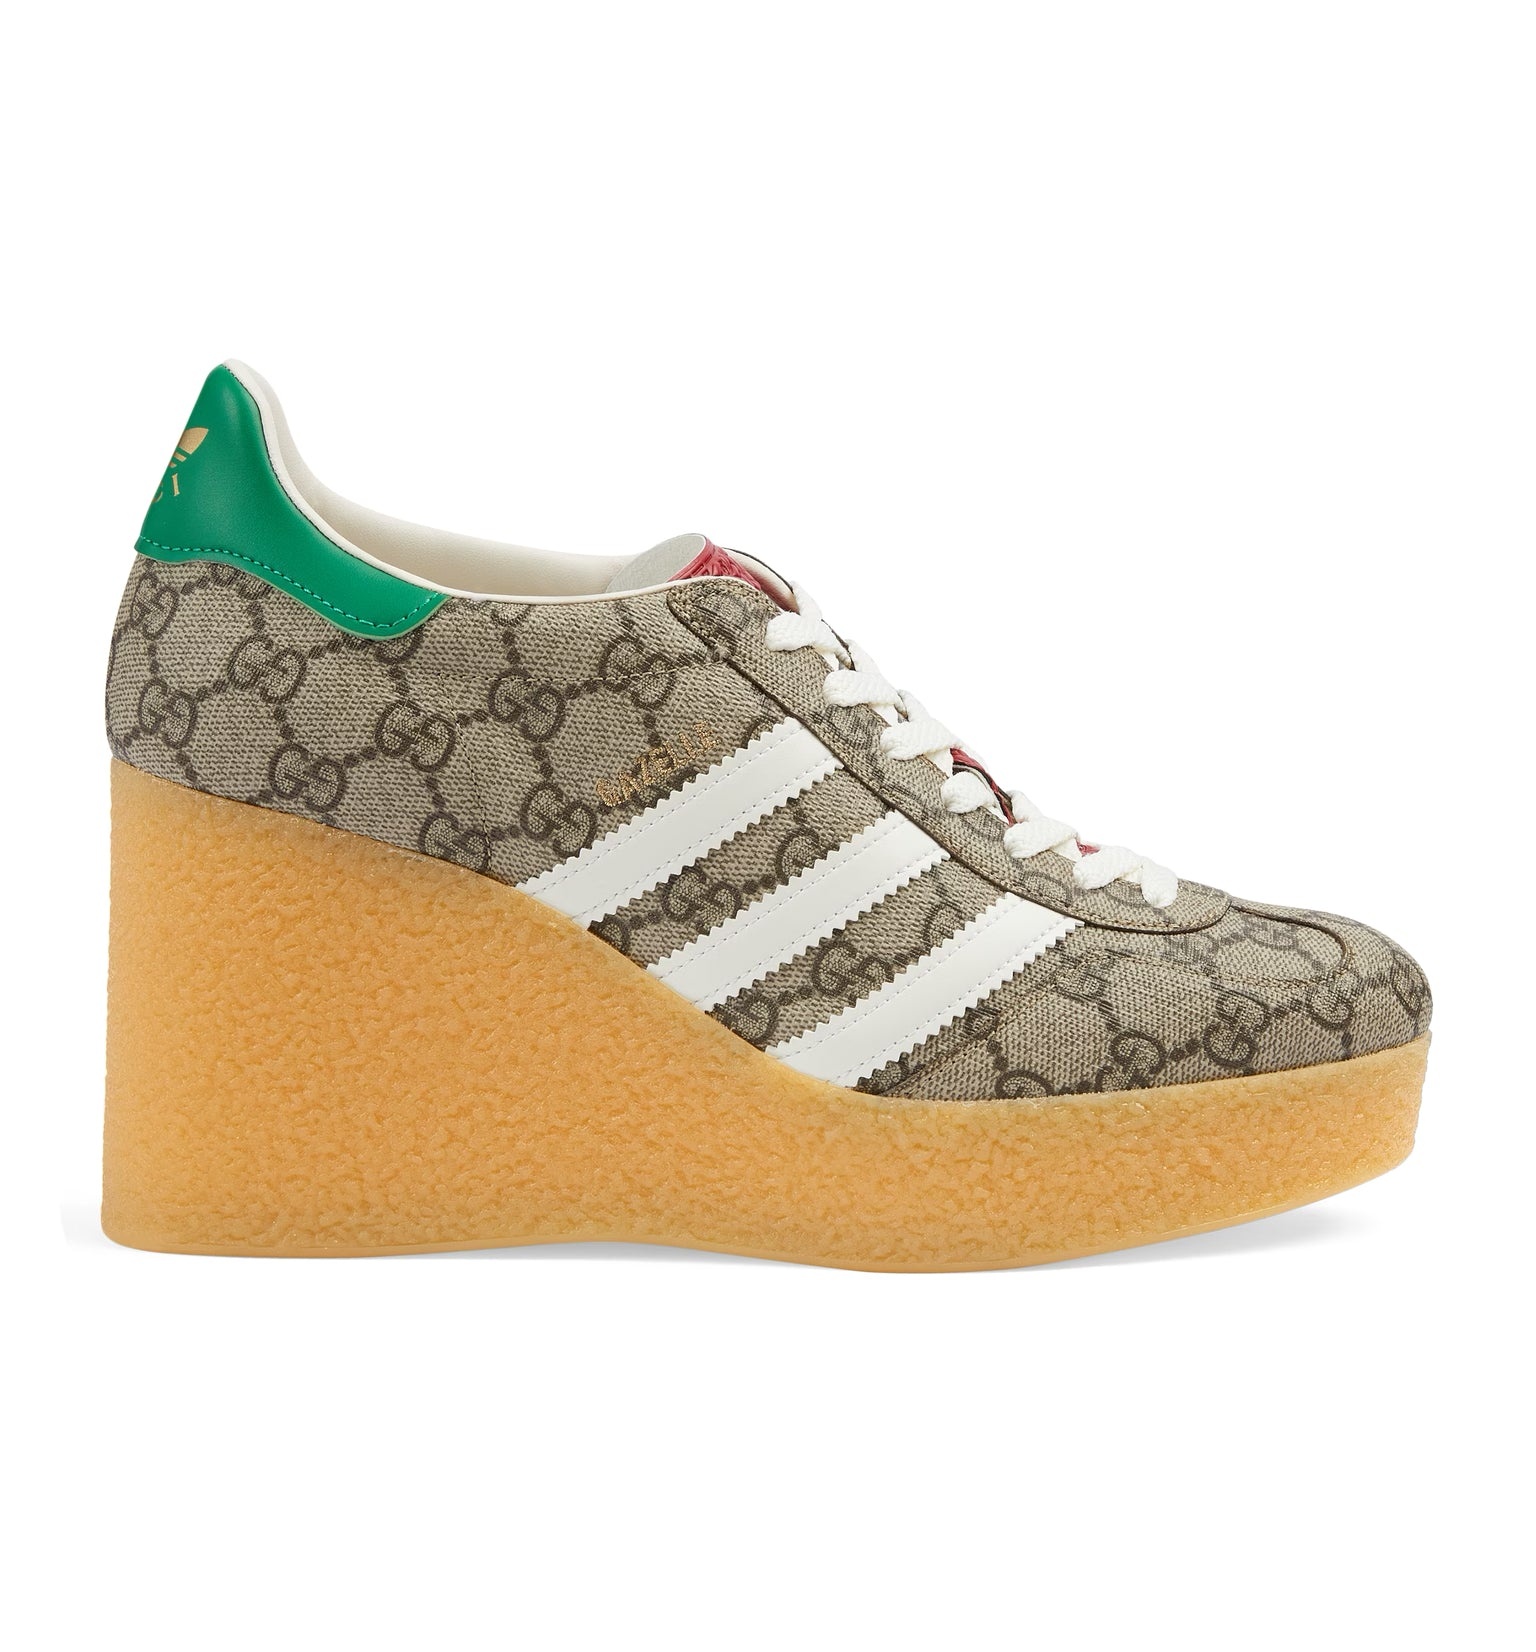 Gucci x Adidas GG Gazelle Wedge Sneakers - 2